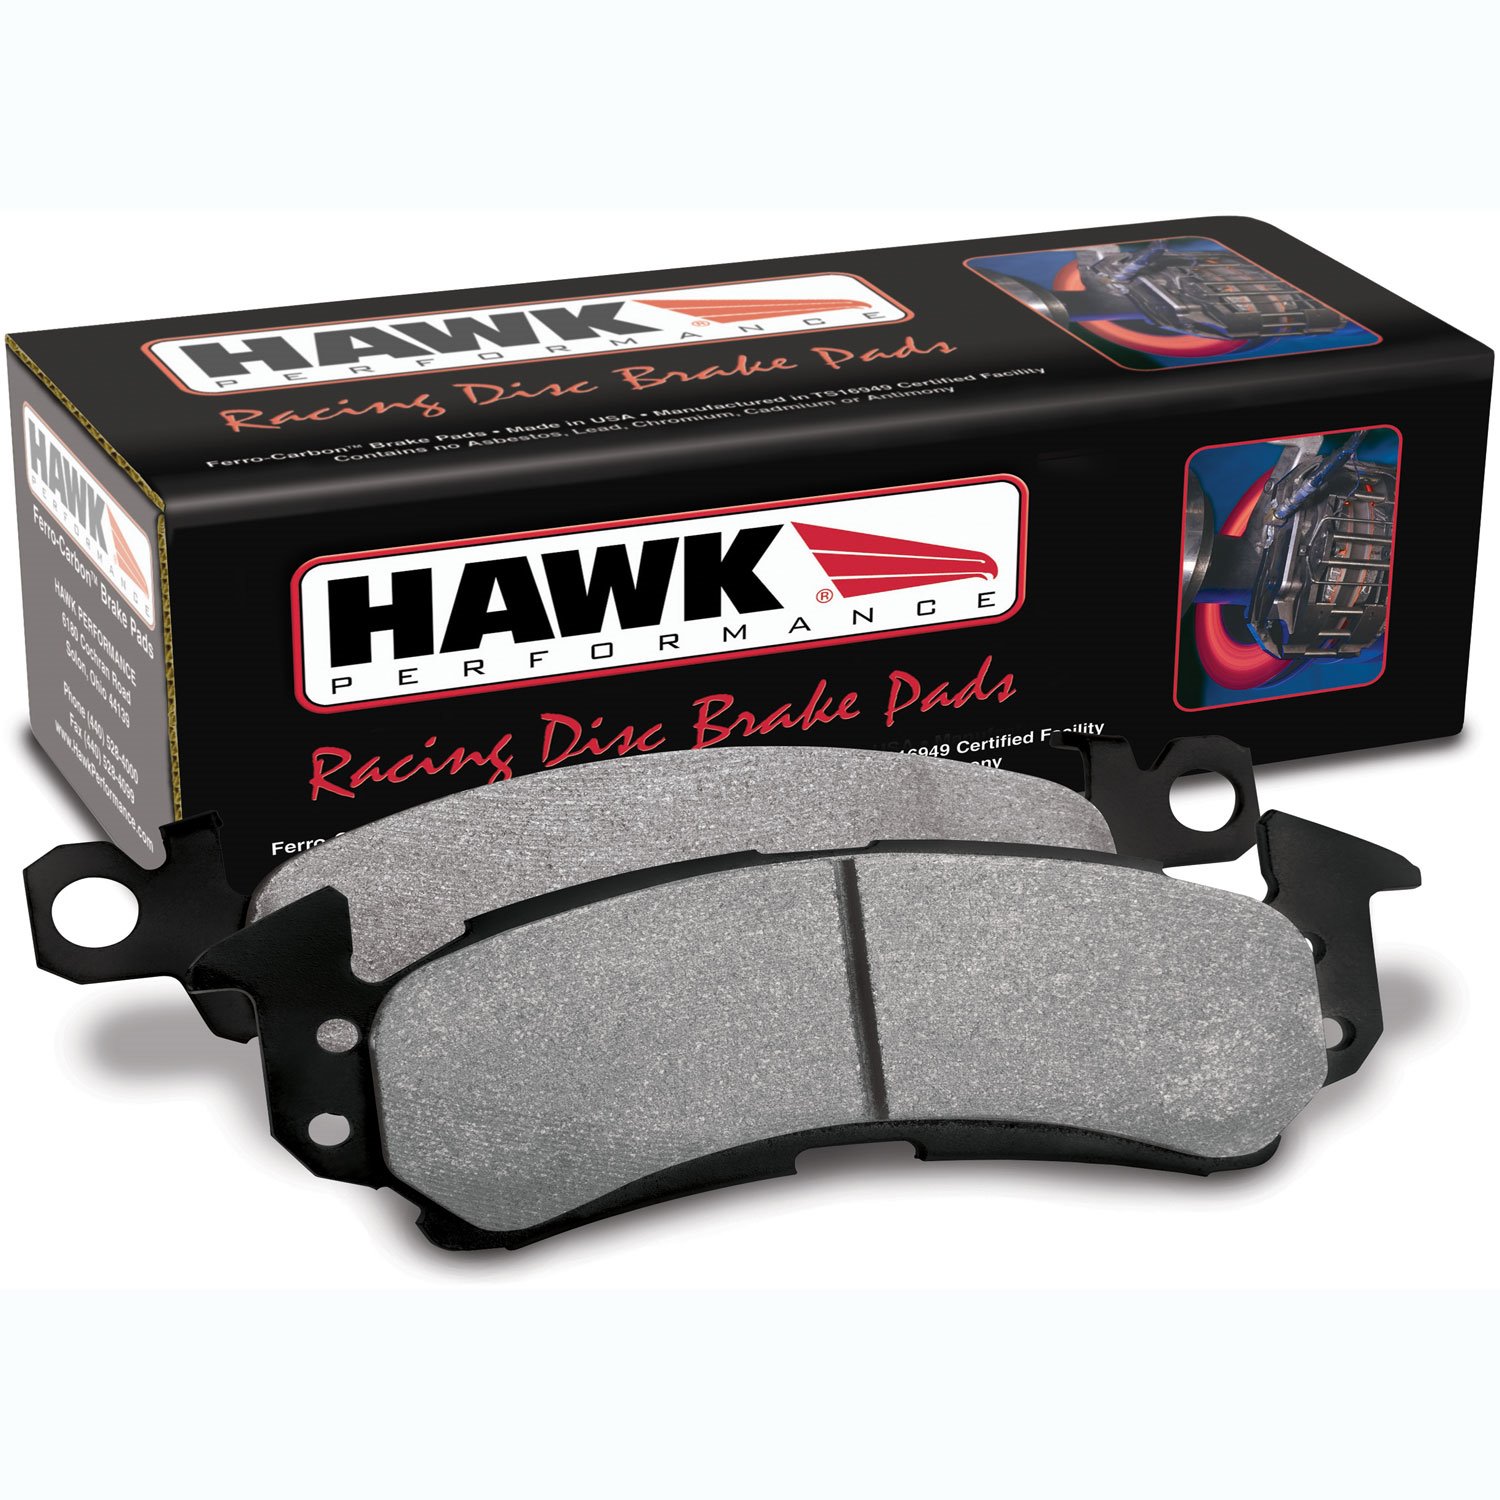 Disc Brake Pad HP Plus w/0.567 Thickness